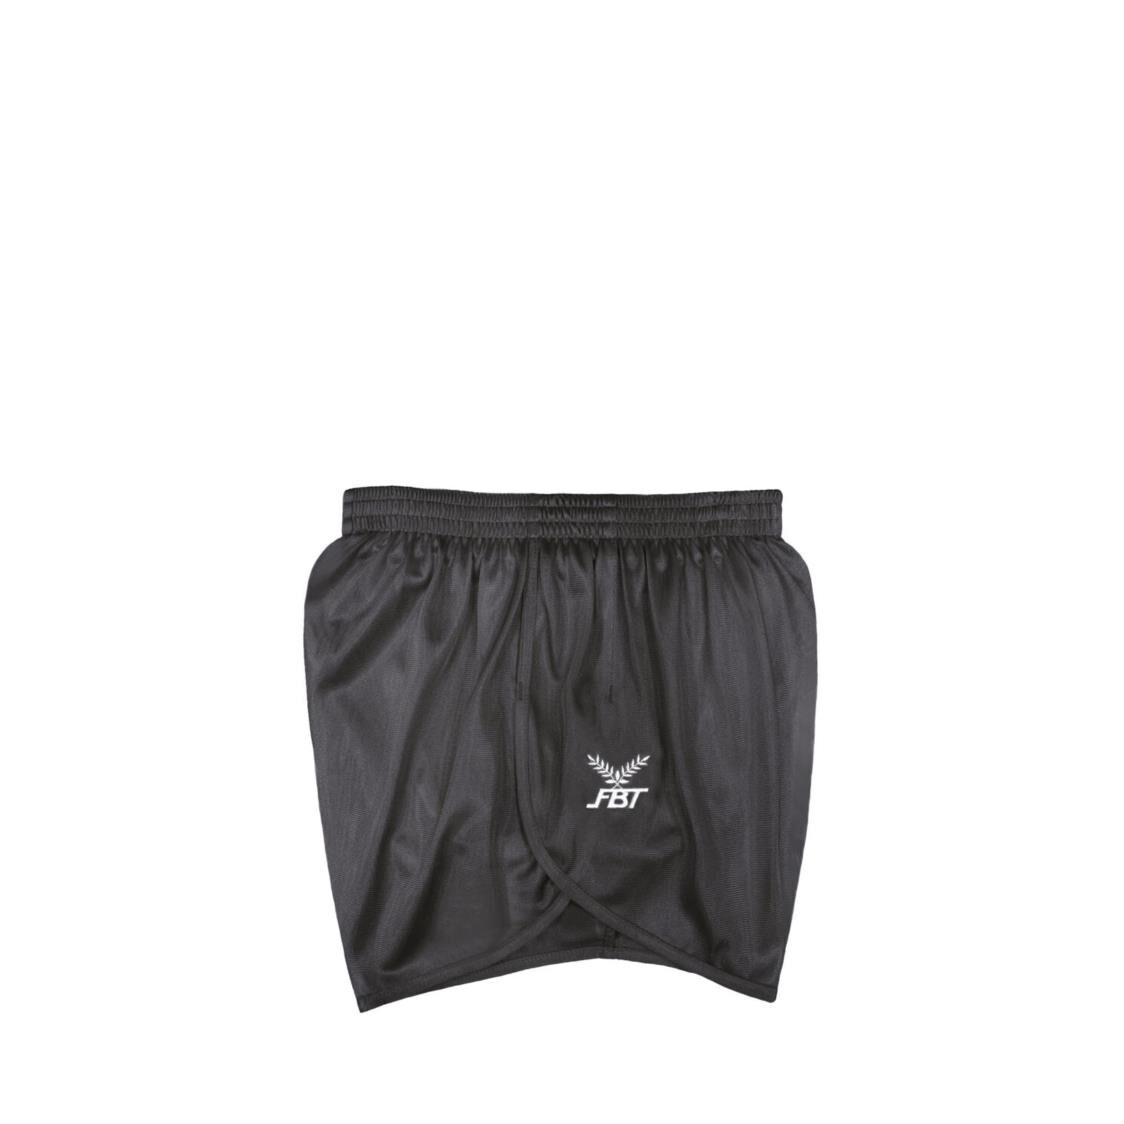 FBT Shorts 22-011 Dark Charcoal Grey